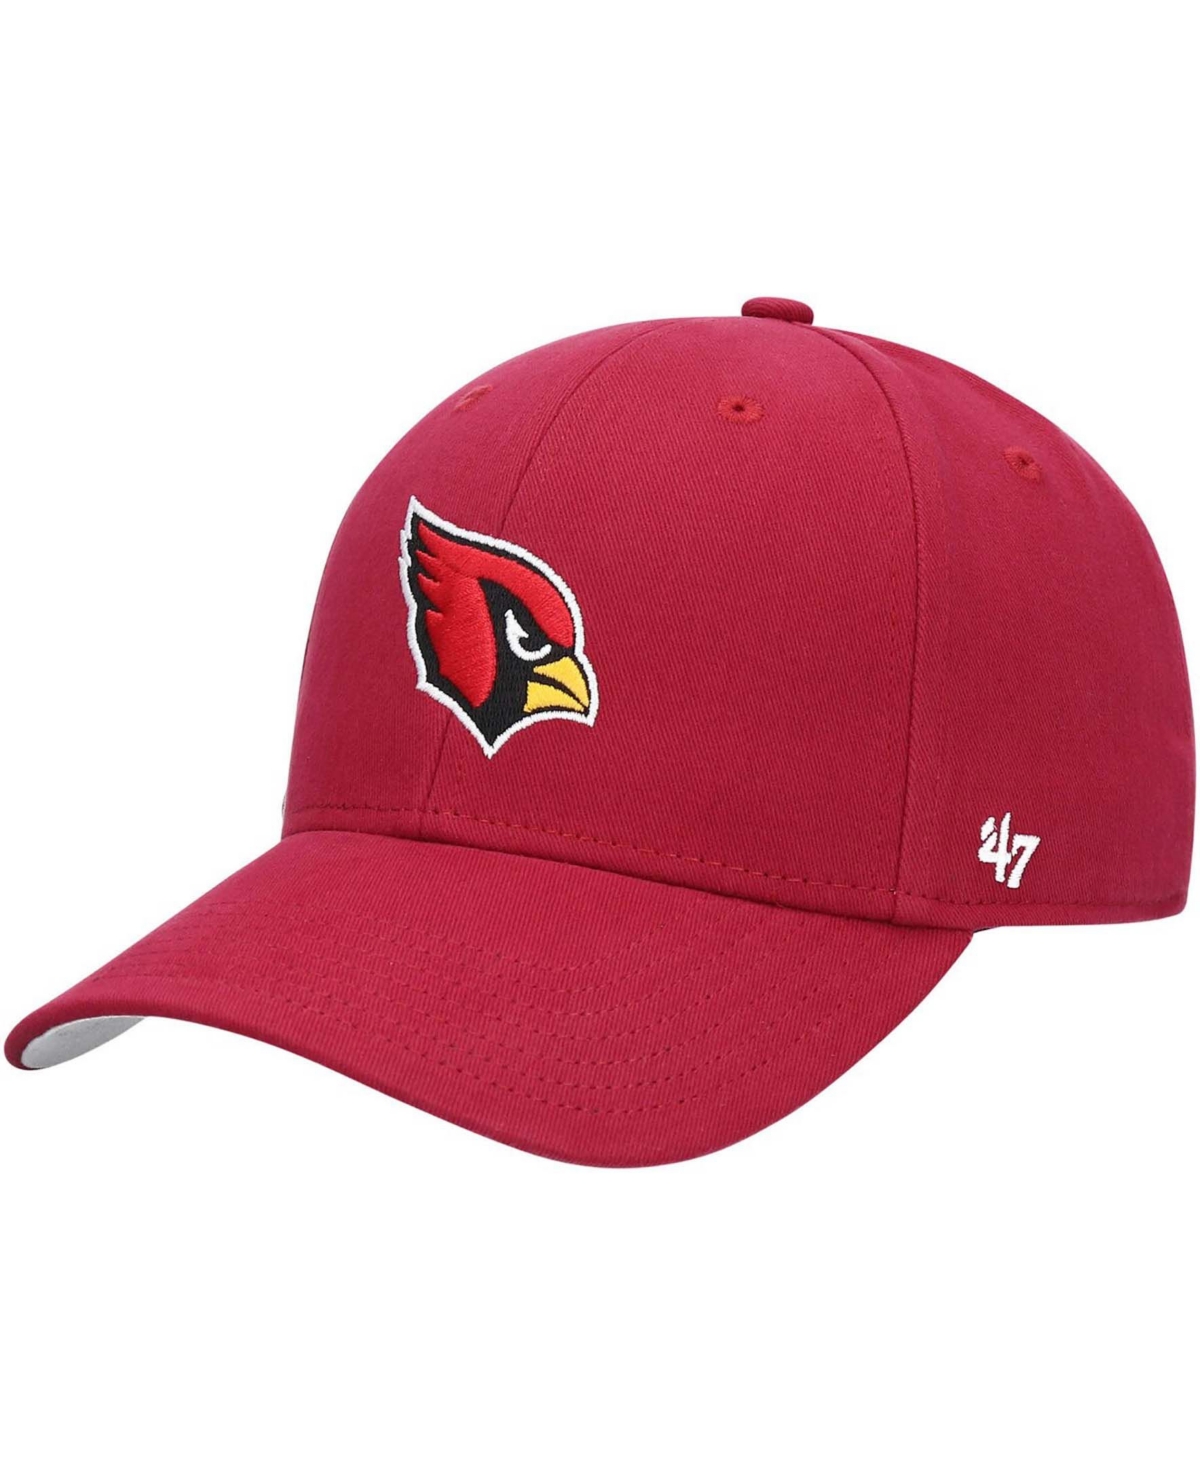 47 Brand Babies' Little Boys And Girls Cardinal Arizona Cardinals Basic Team Mvp Adjustable Hat